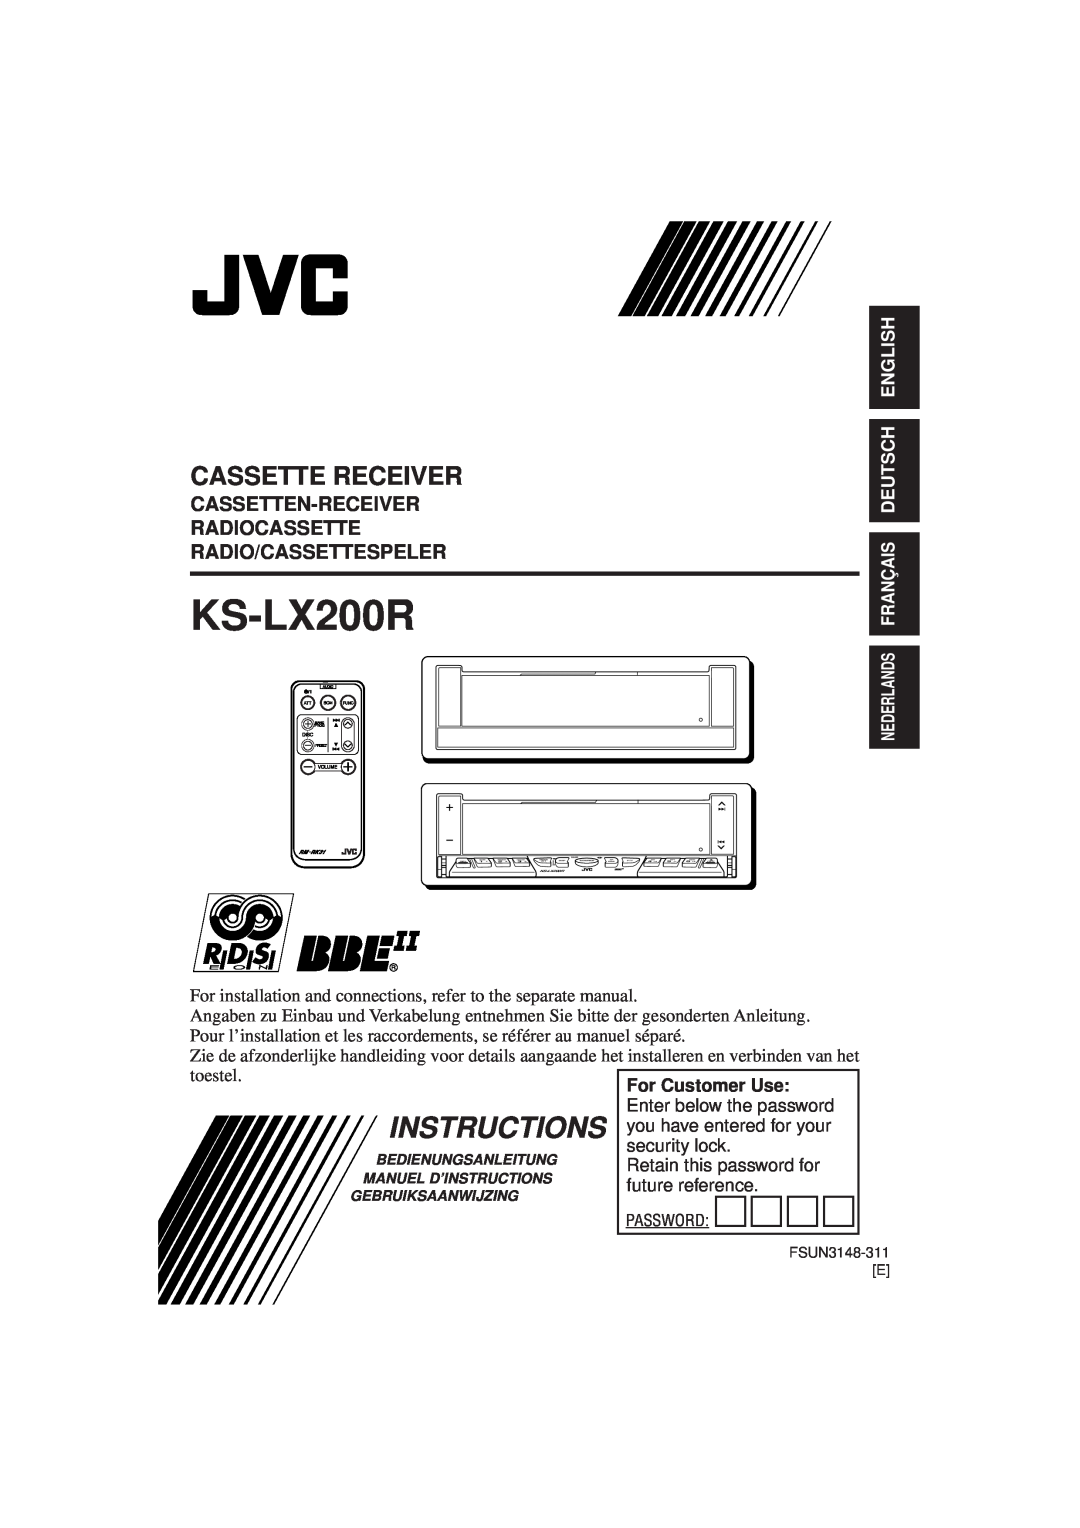 JVC KS-LX200R manual Cassette Receiver, Cassetten-Receiver Radiocassette, Radio/Cassettespeler, Instructions 